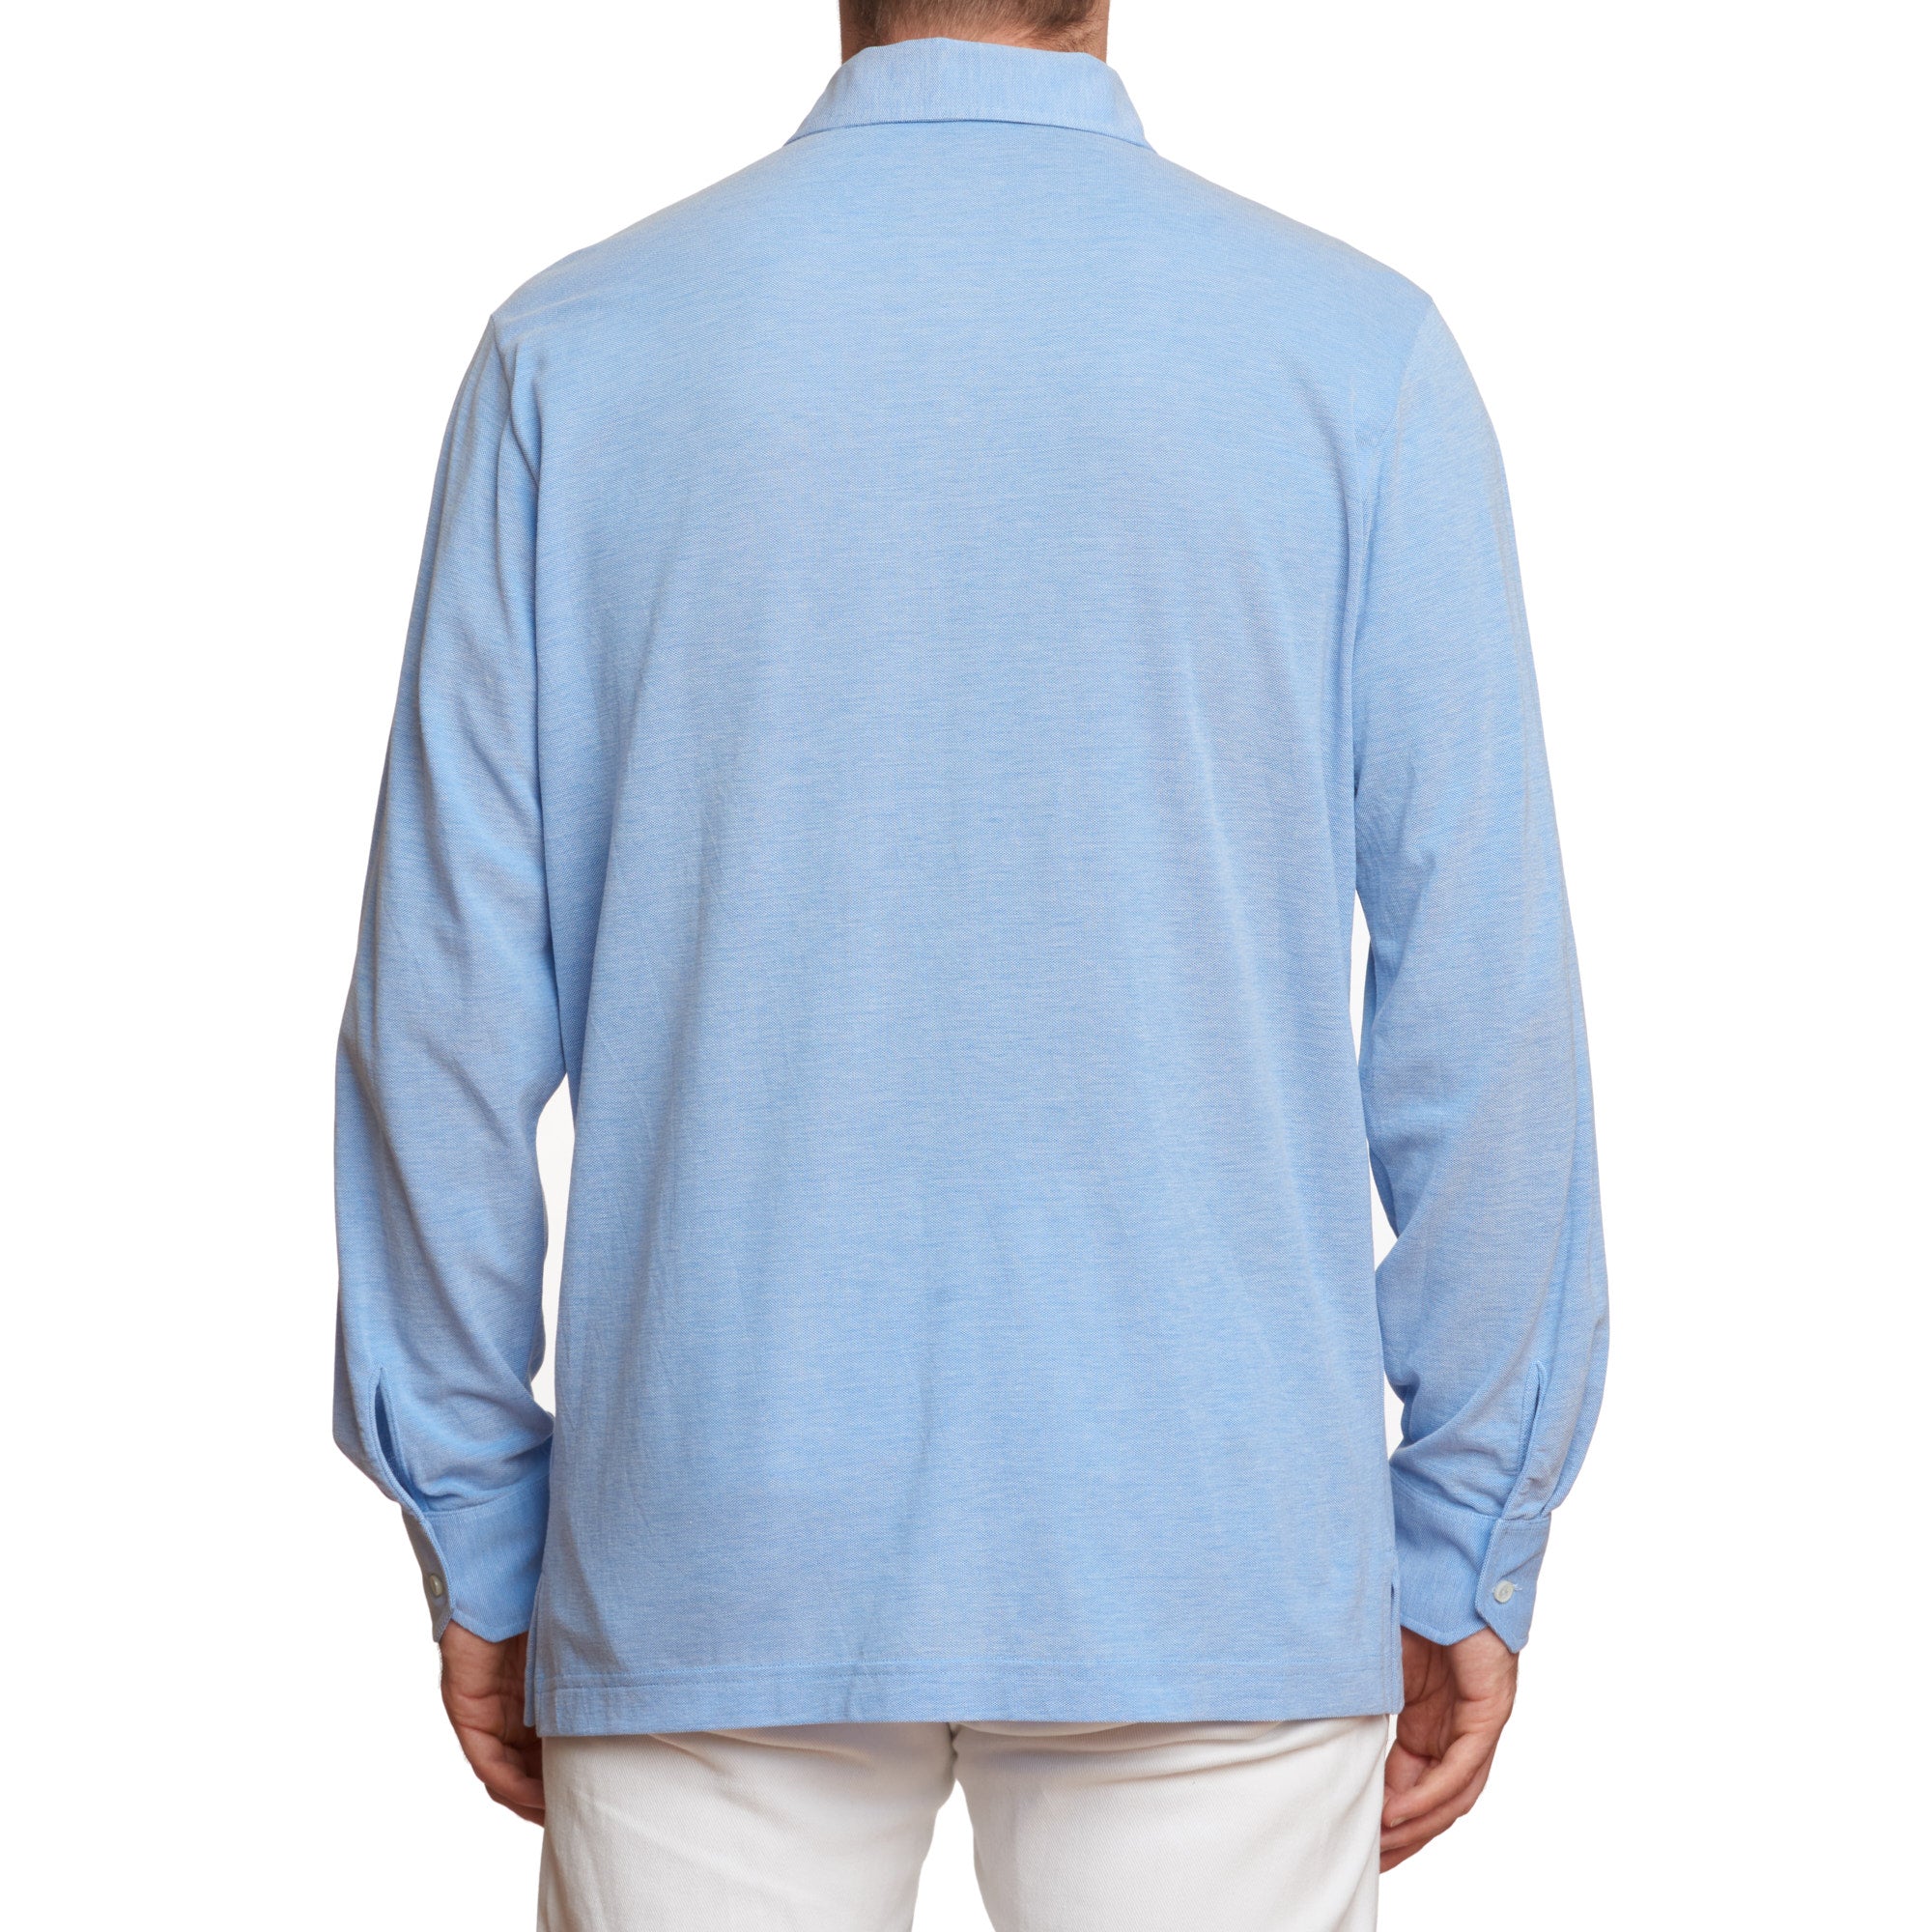 M.BARDELLI Milano Light Blue Oxford Cotton 1 Pocket Casual Shirt Size L M.BARDELLI